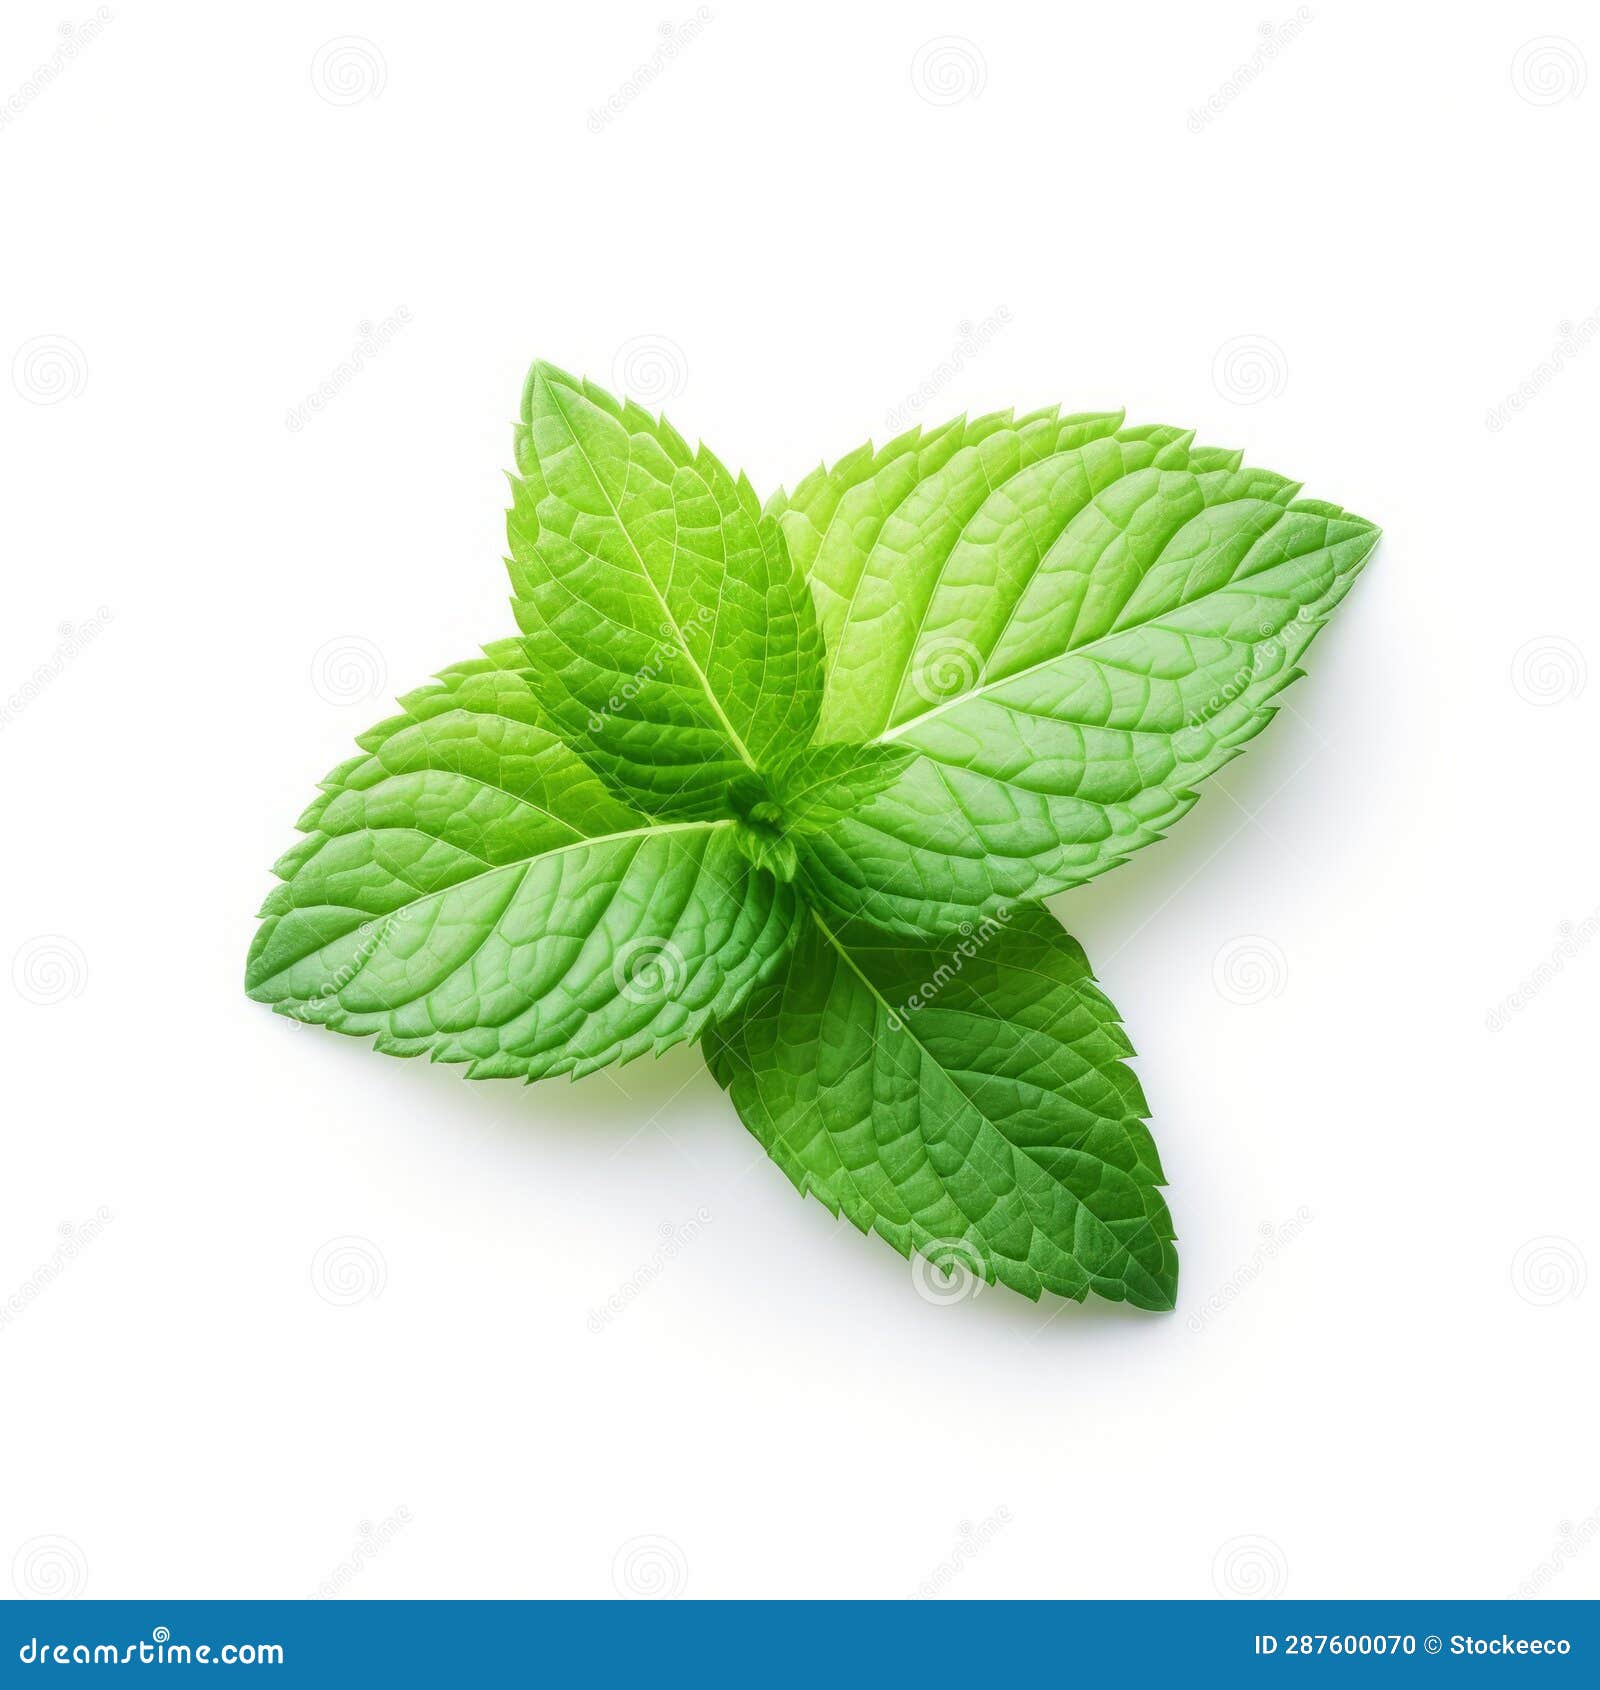 vibrant mint leaf on white background